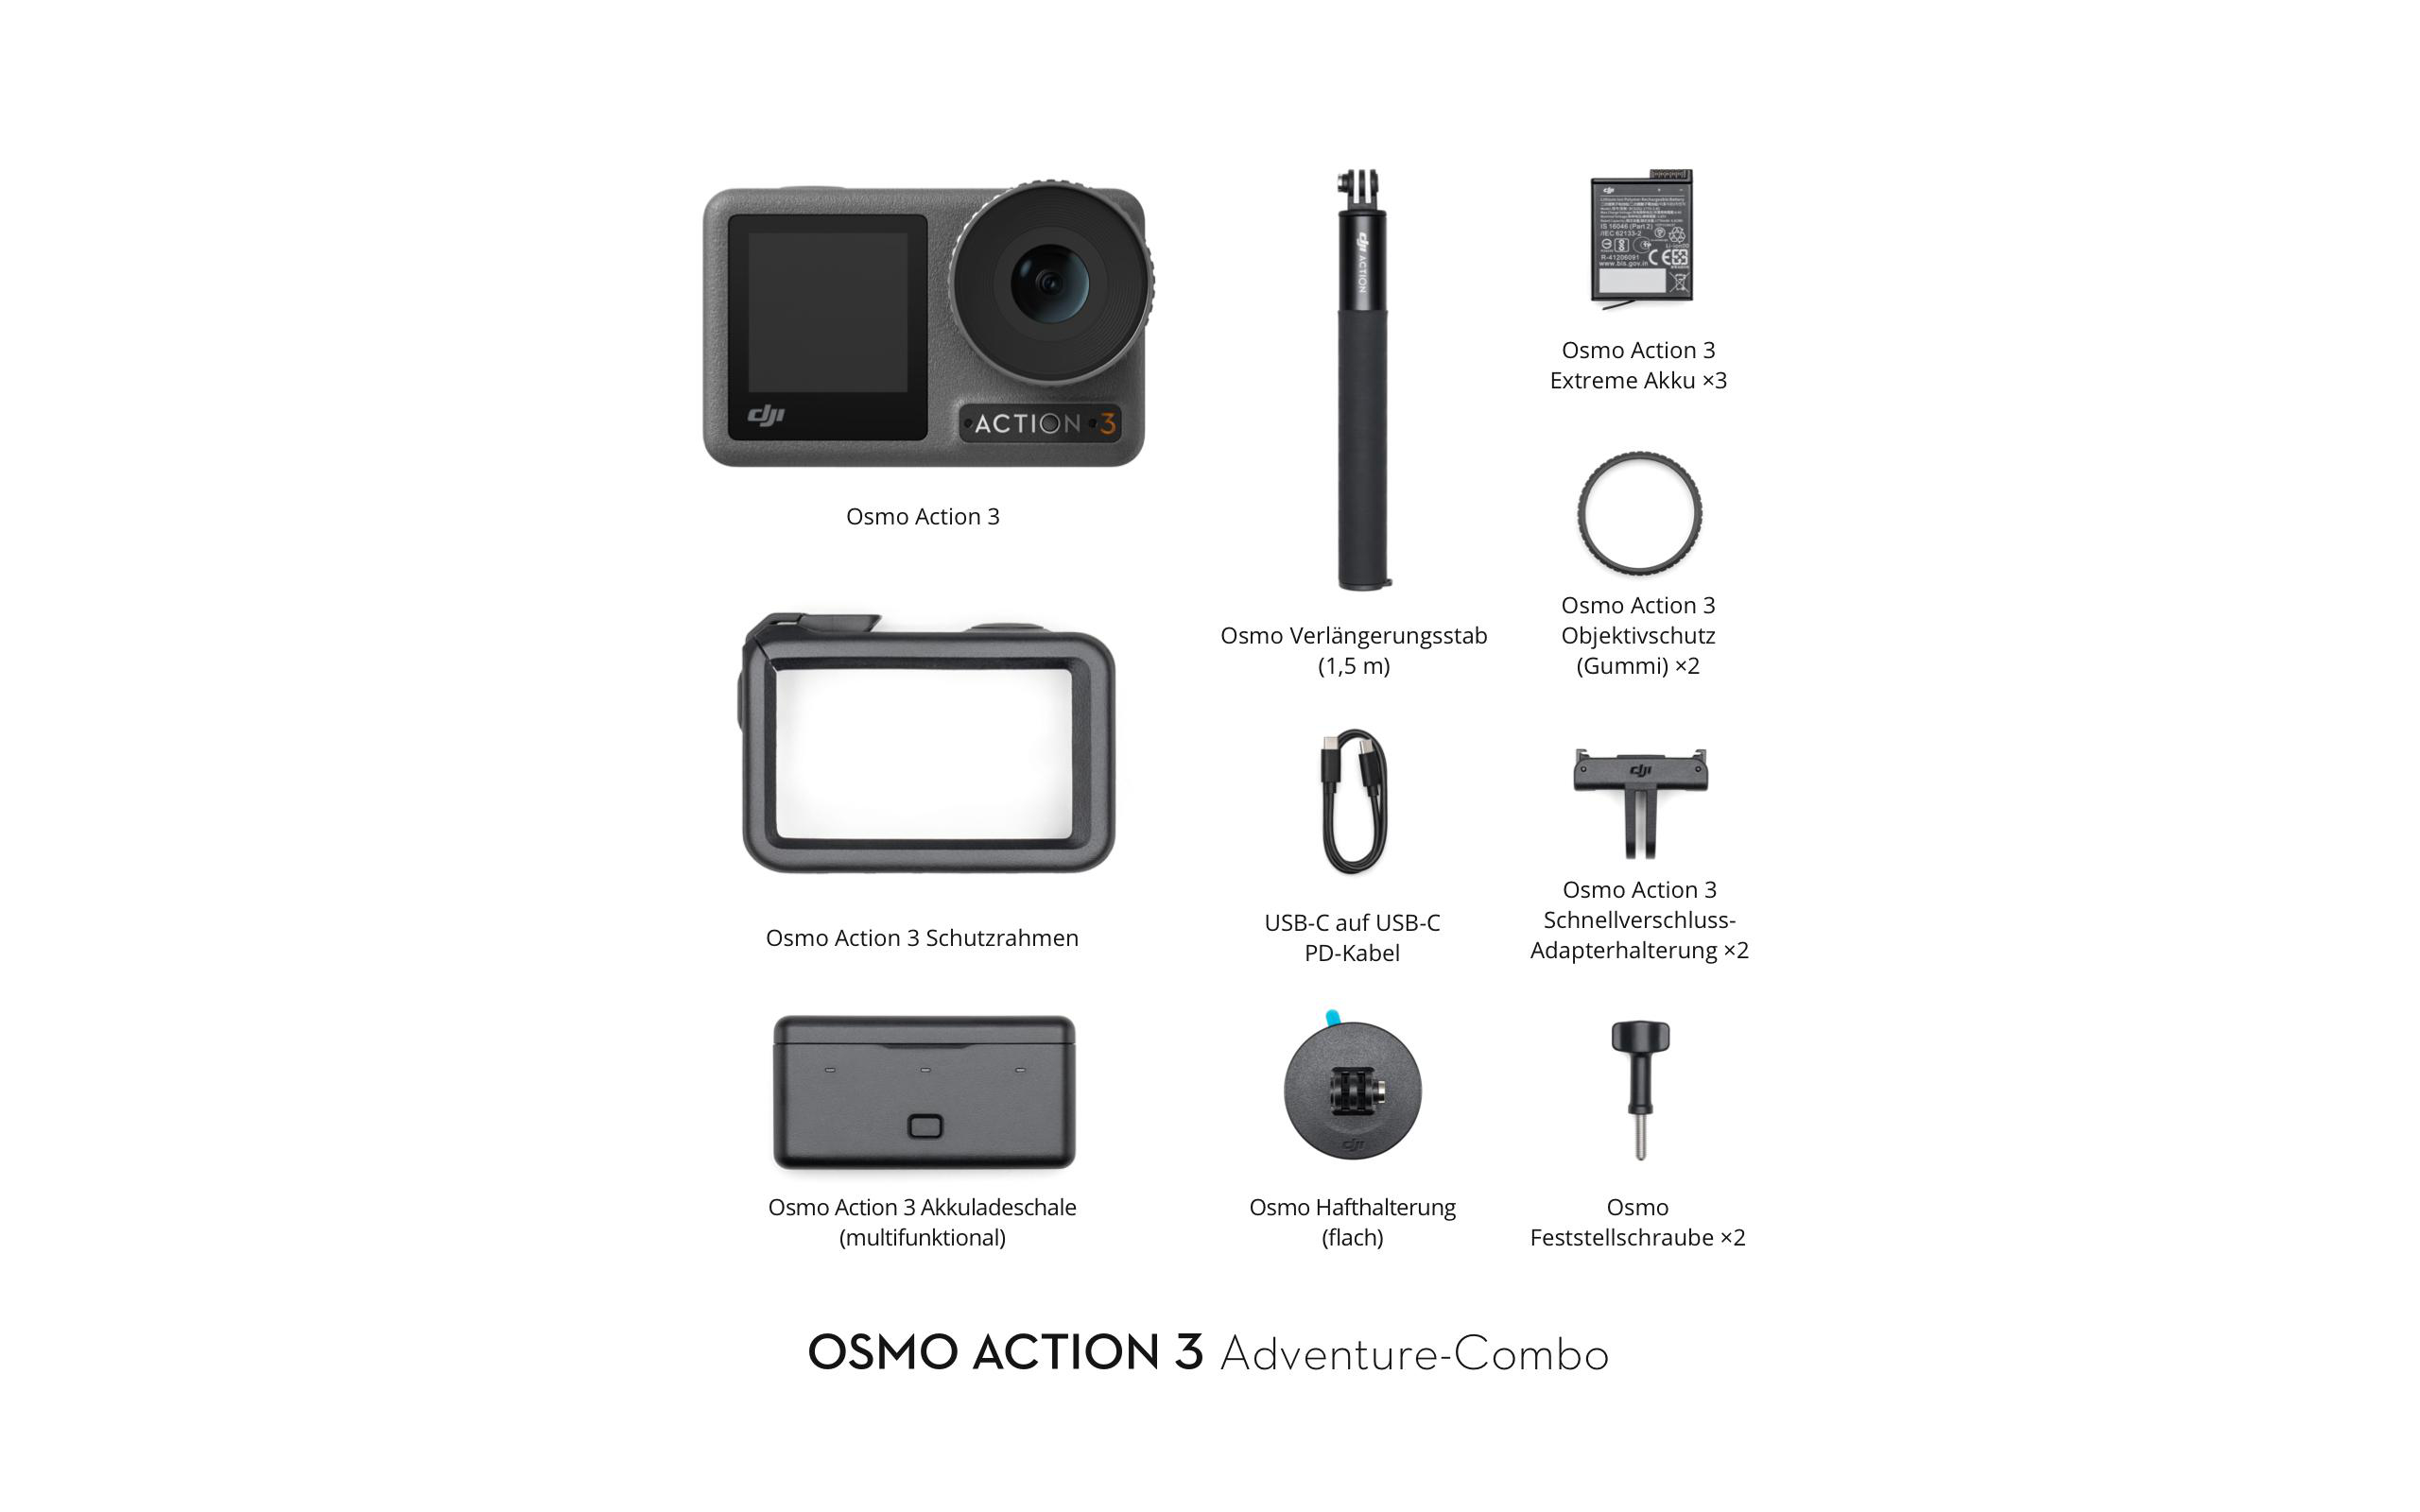 Adventure-Combo DJI Action 3 Osmo , WLAN, Actioncam Touchscreen